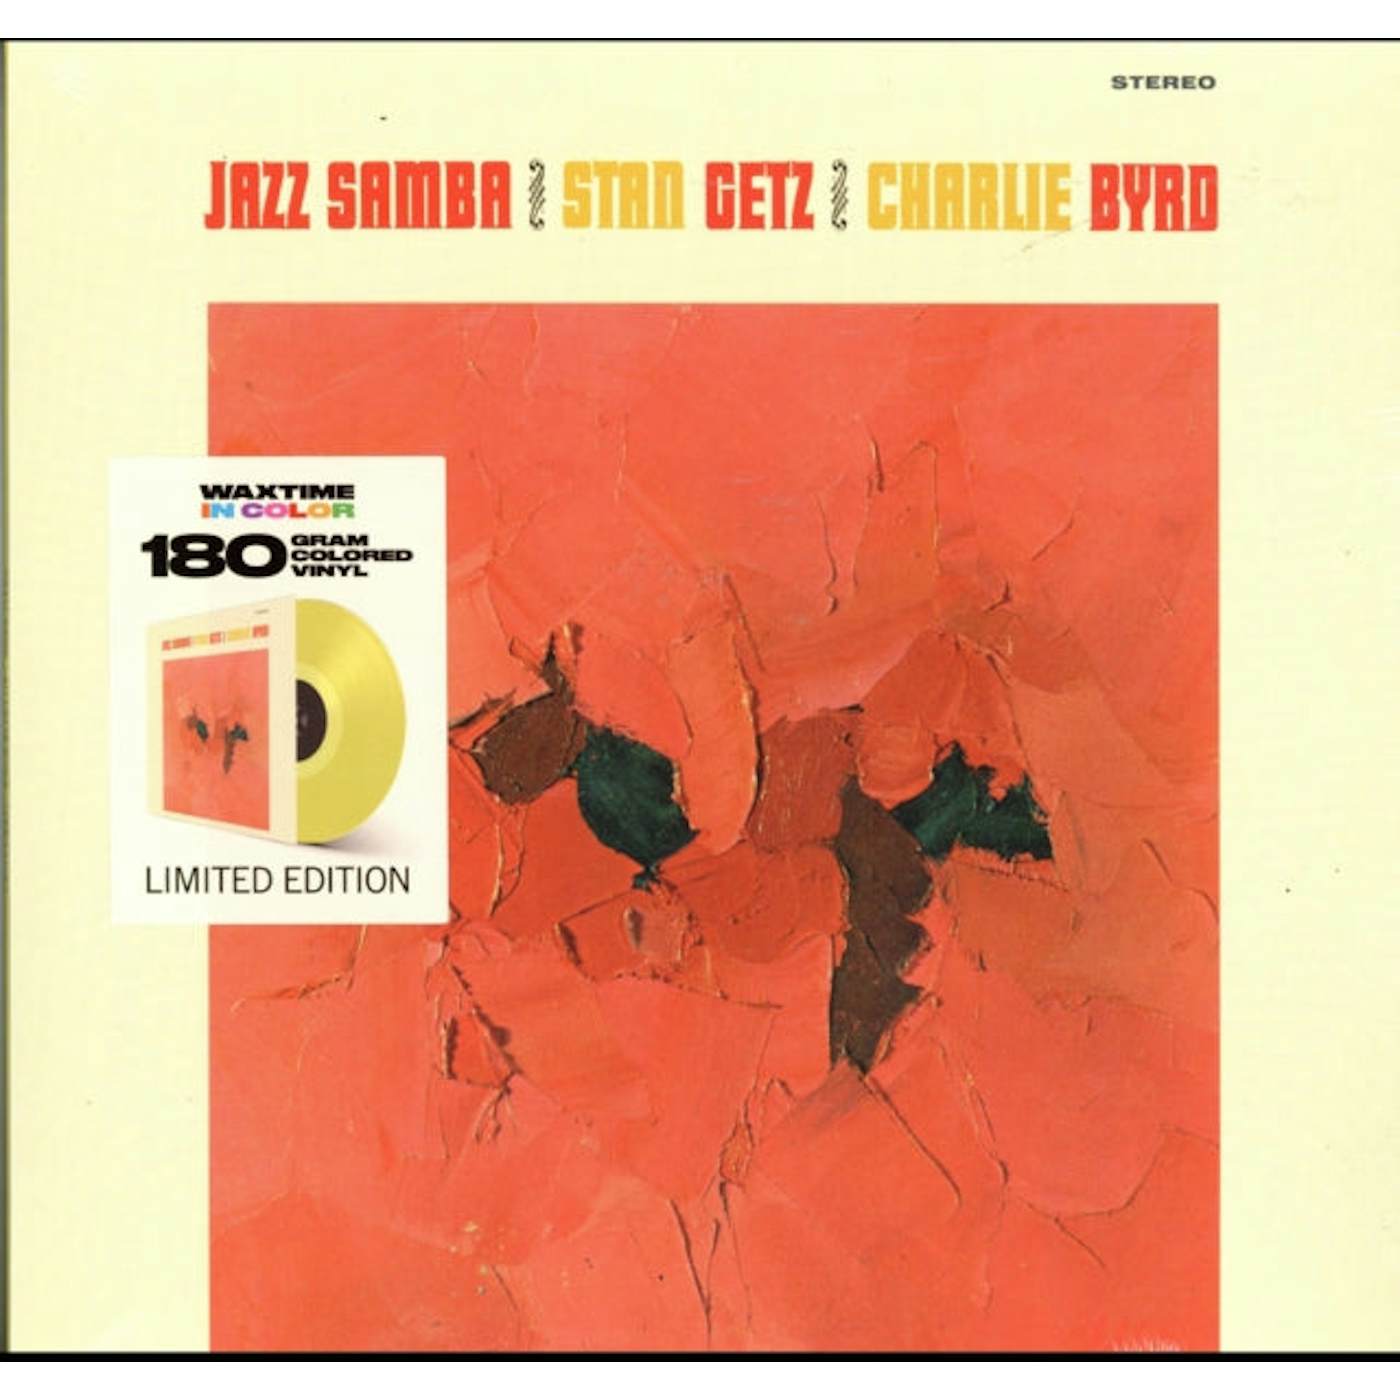 Stan Getz & Charlie Byrd LP Vinyl Record - Jazz Samba (Limited Solid Blue Vinyl)